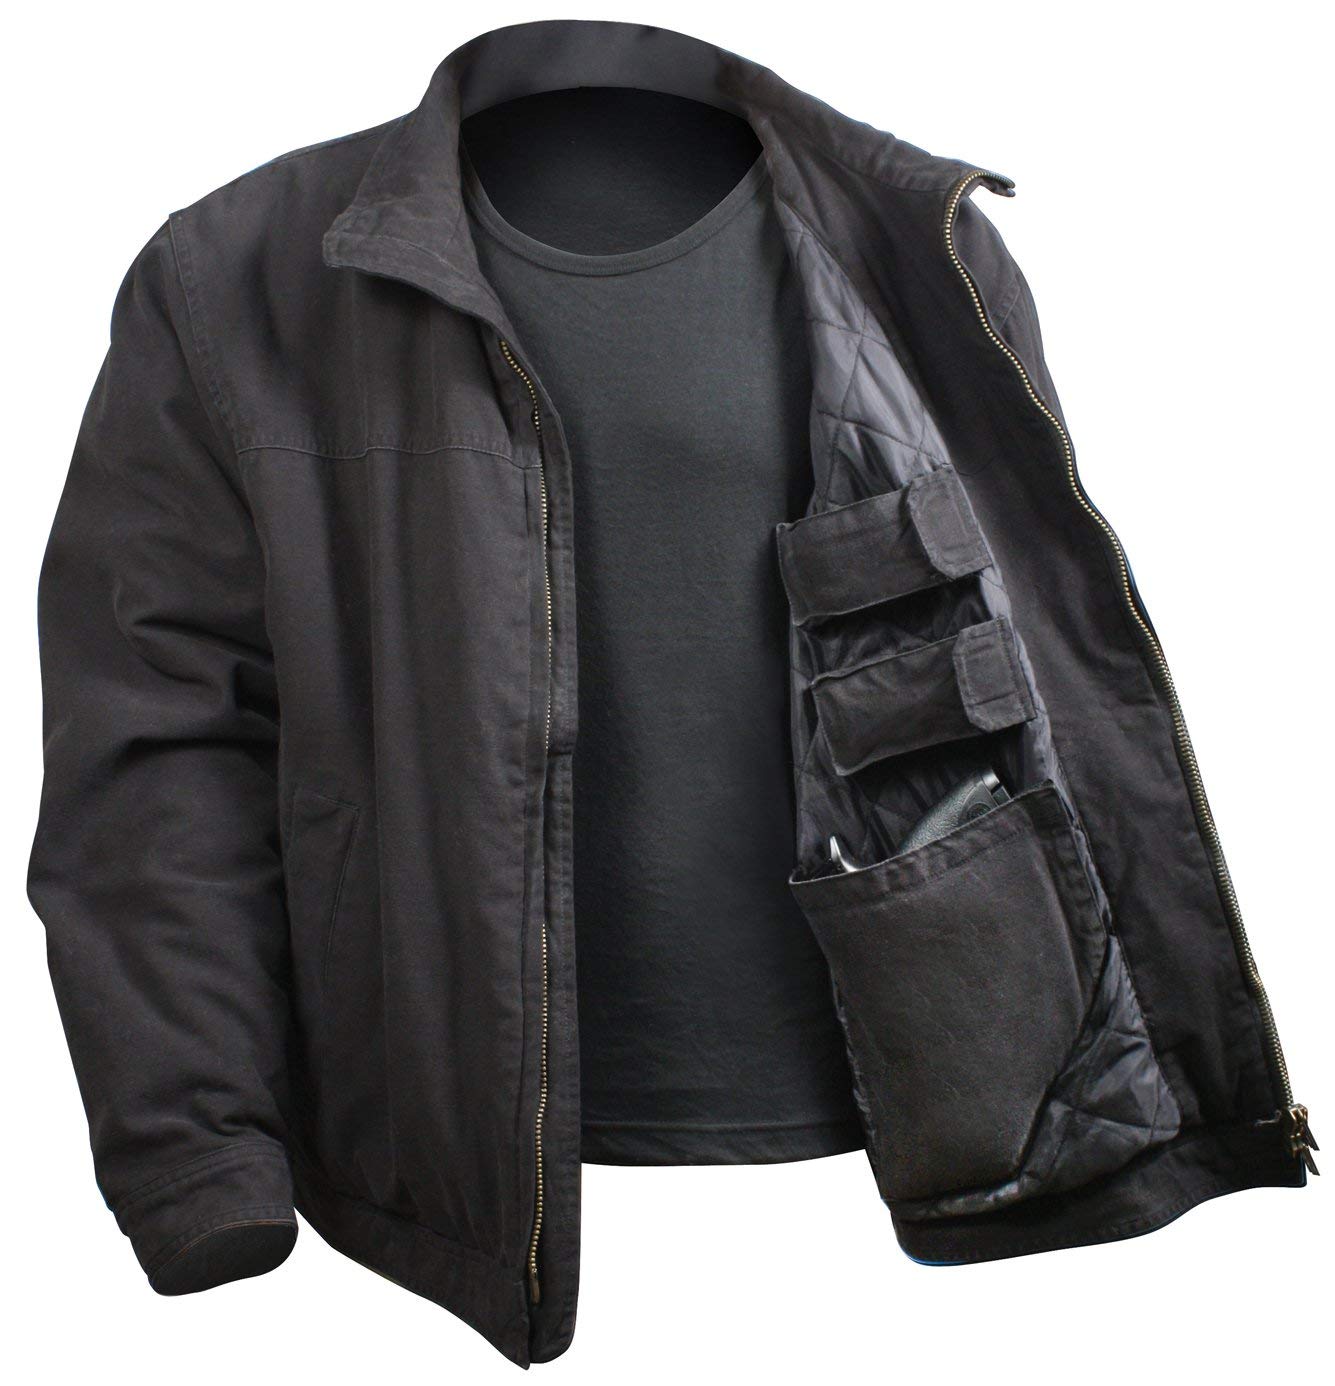 Rothco 3 Season Concealed Carry Jacket - Black - Medium - 5385-BLACK-M